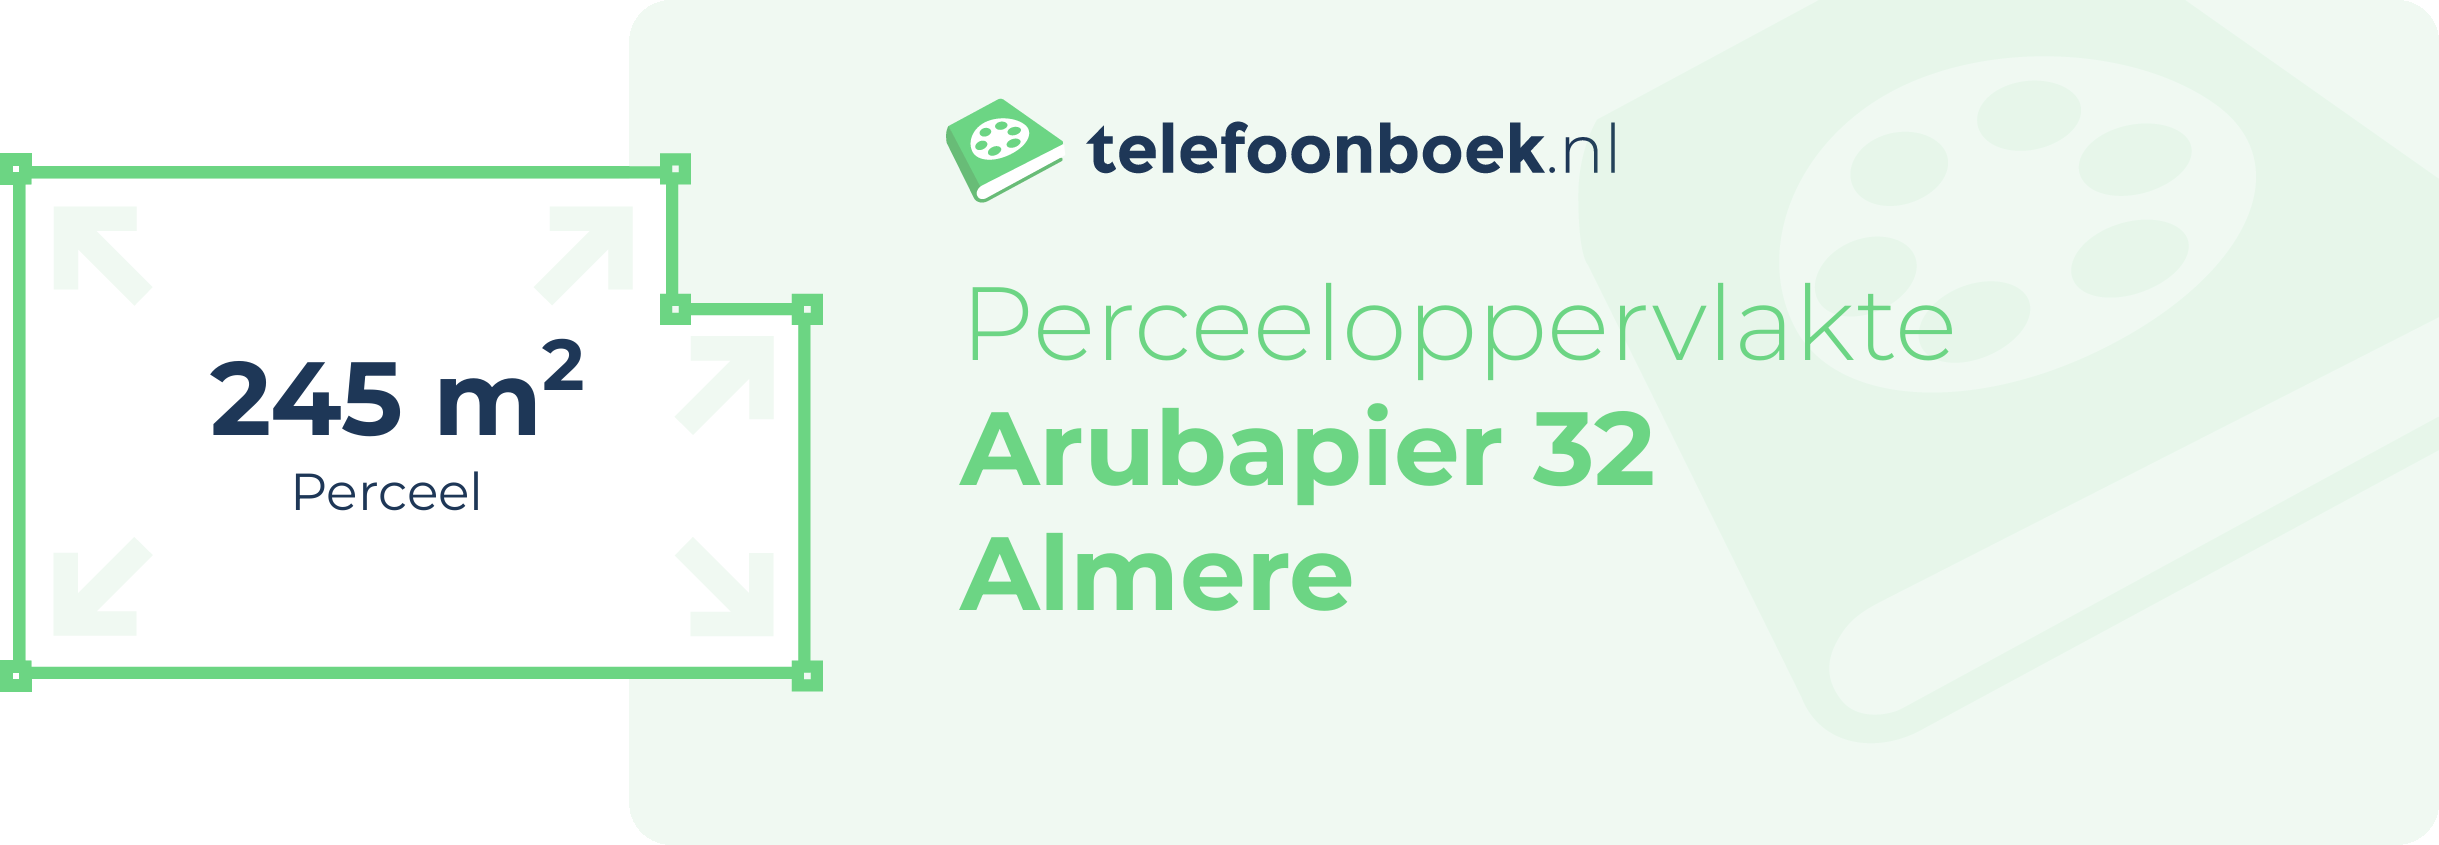 Perceeloppervlakte Arubapier 32 Almere